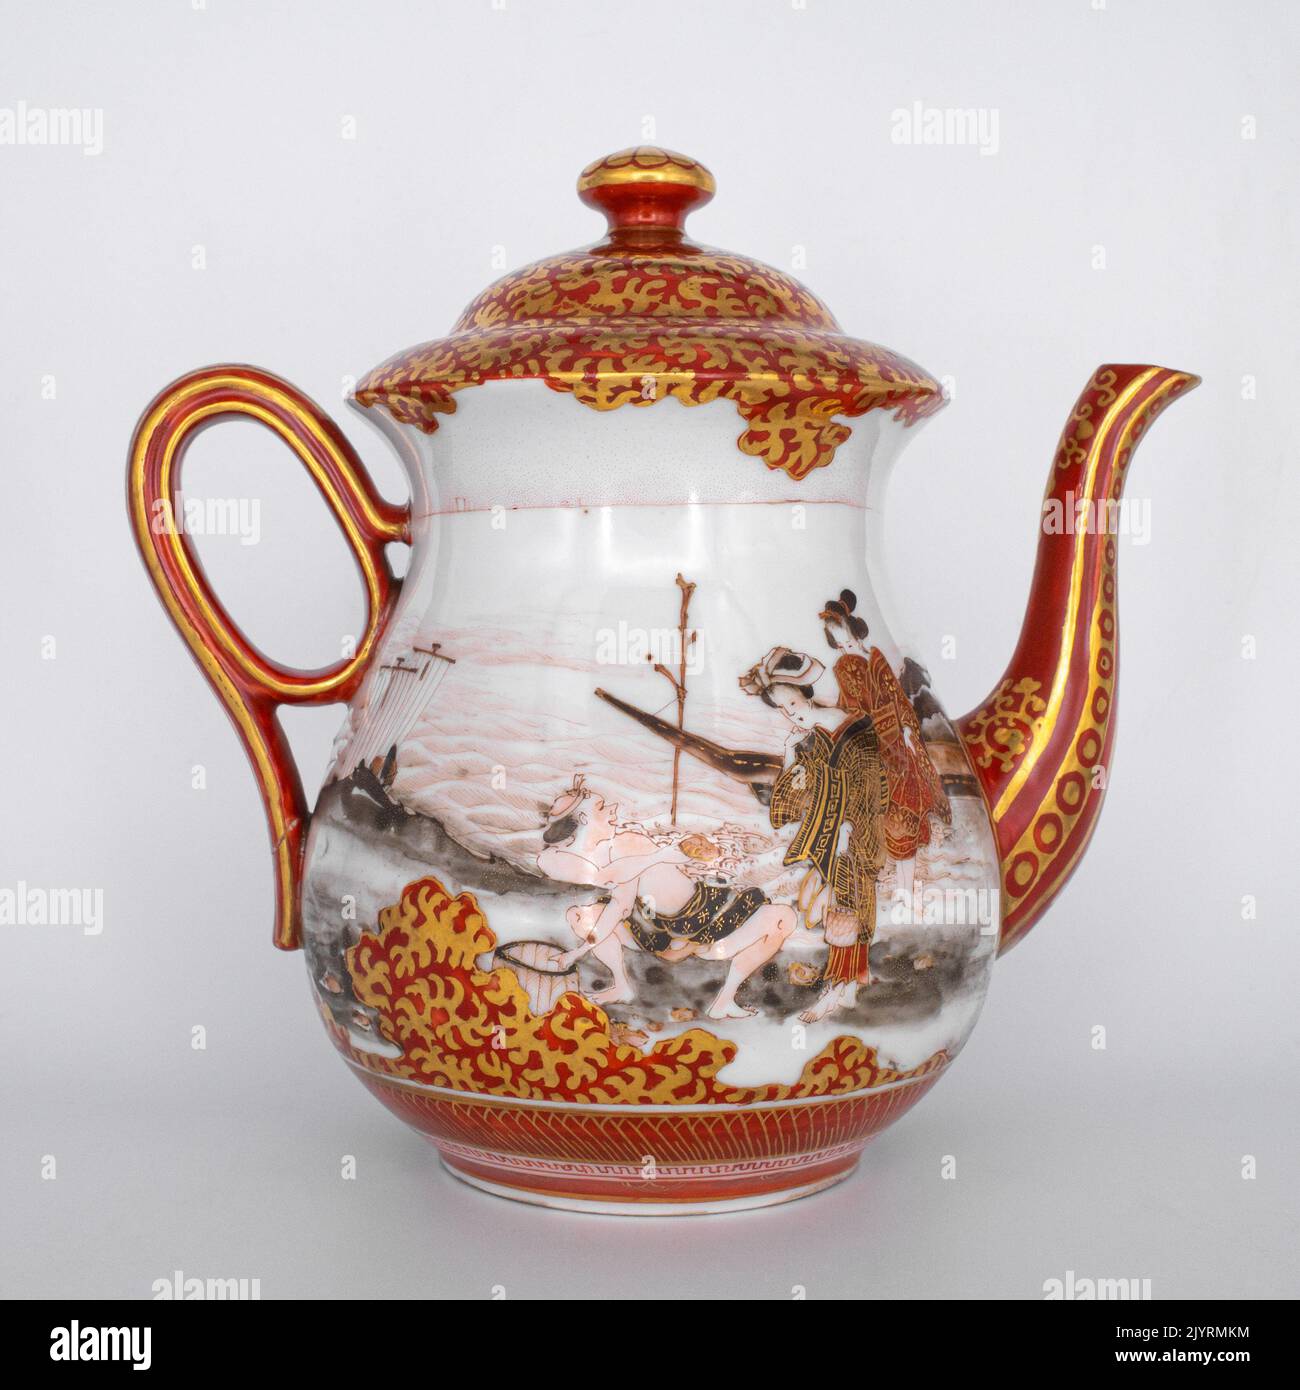 https://c8.alamy.com/comp/2JYRMKM/fine-antique-japanese-kutani-porcelain-teapot-and-cups-by-kachoken-meiji-period-2JYRMKM.jpg